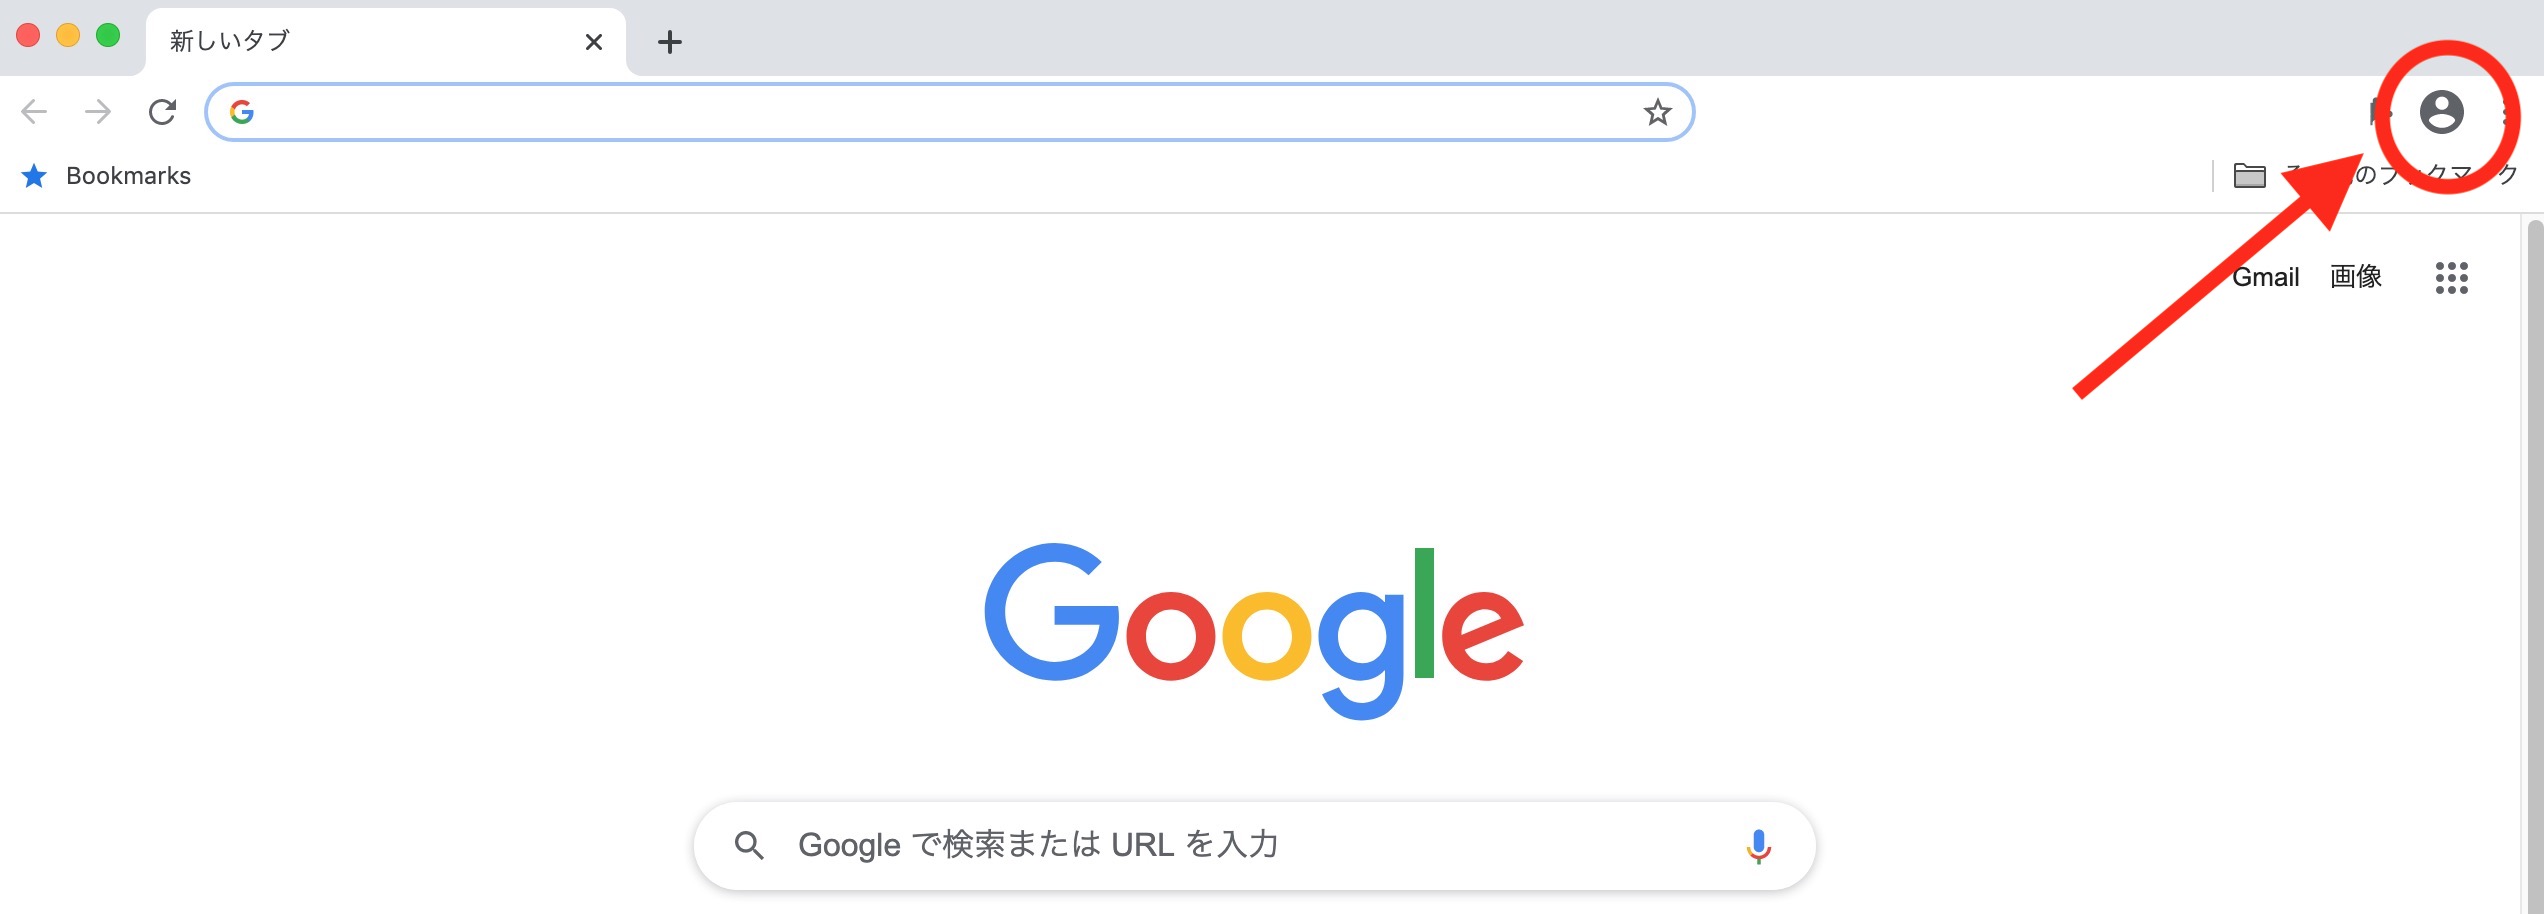 Google Chromeログイン